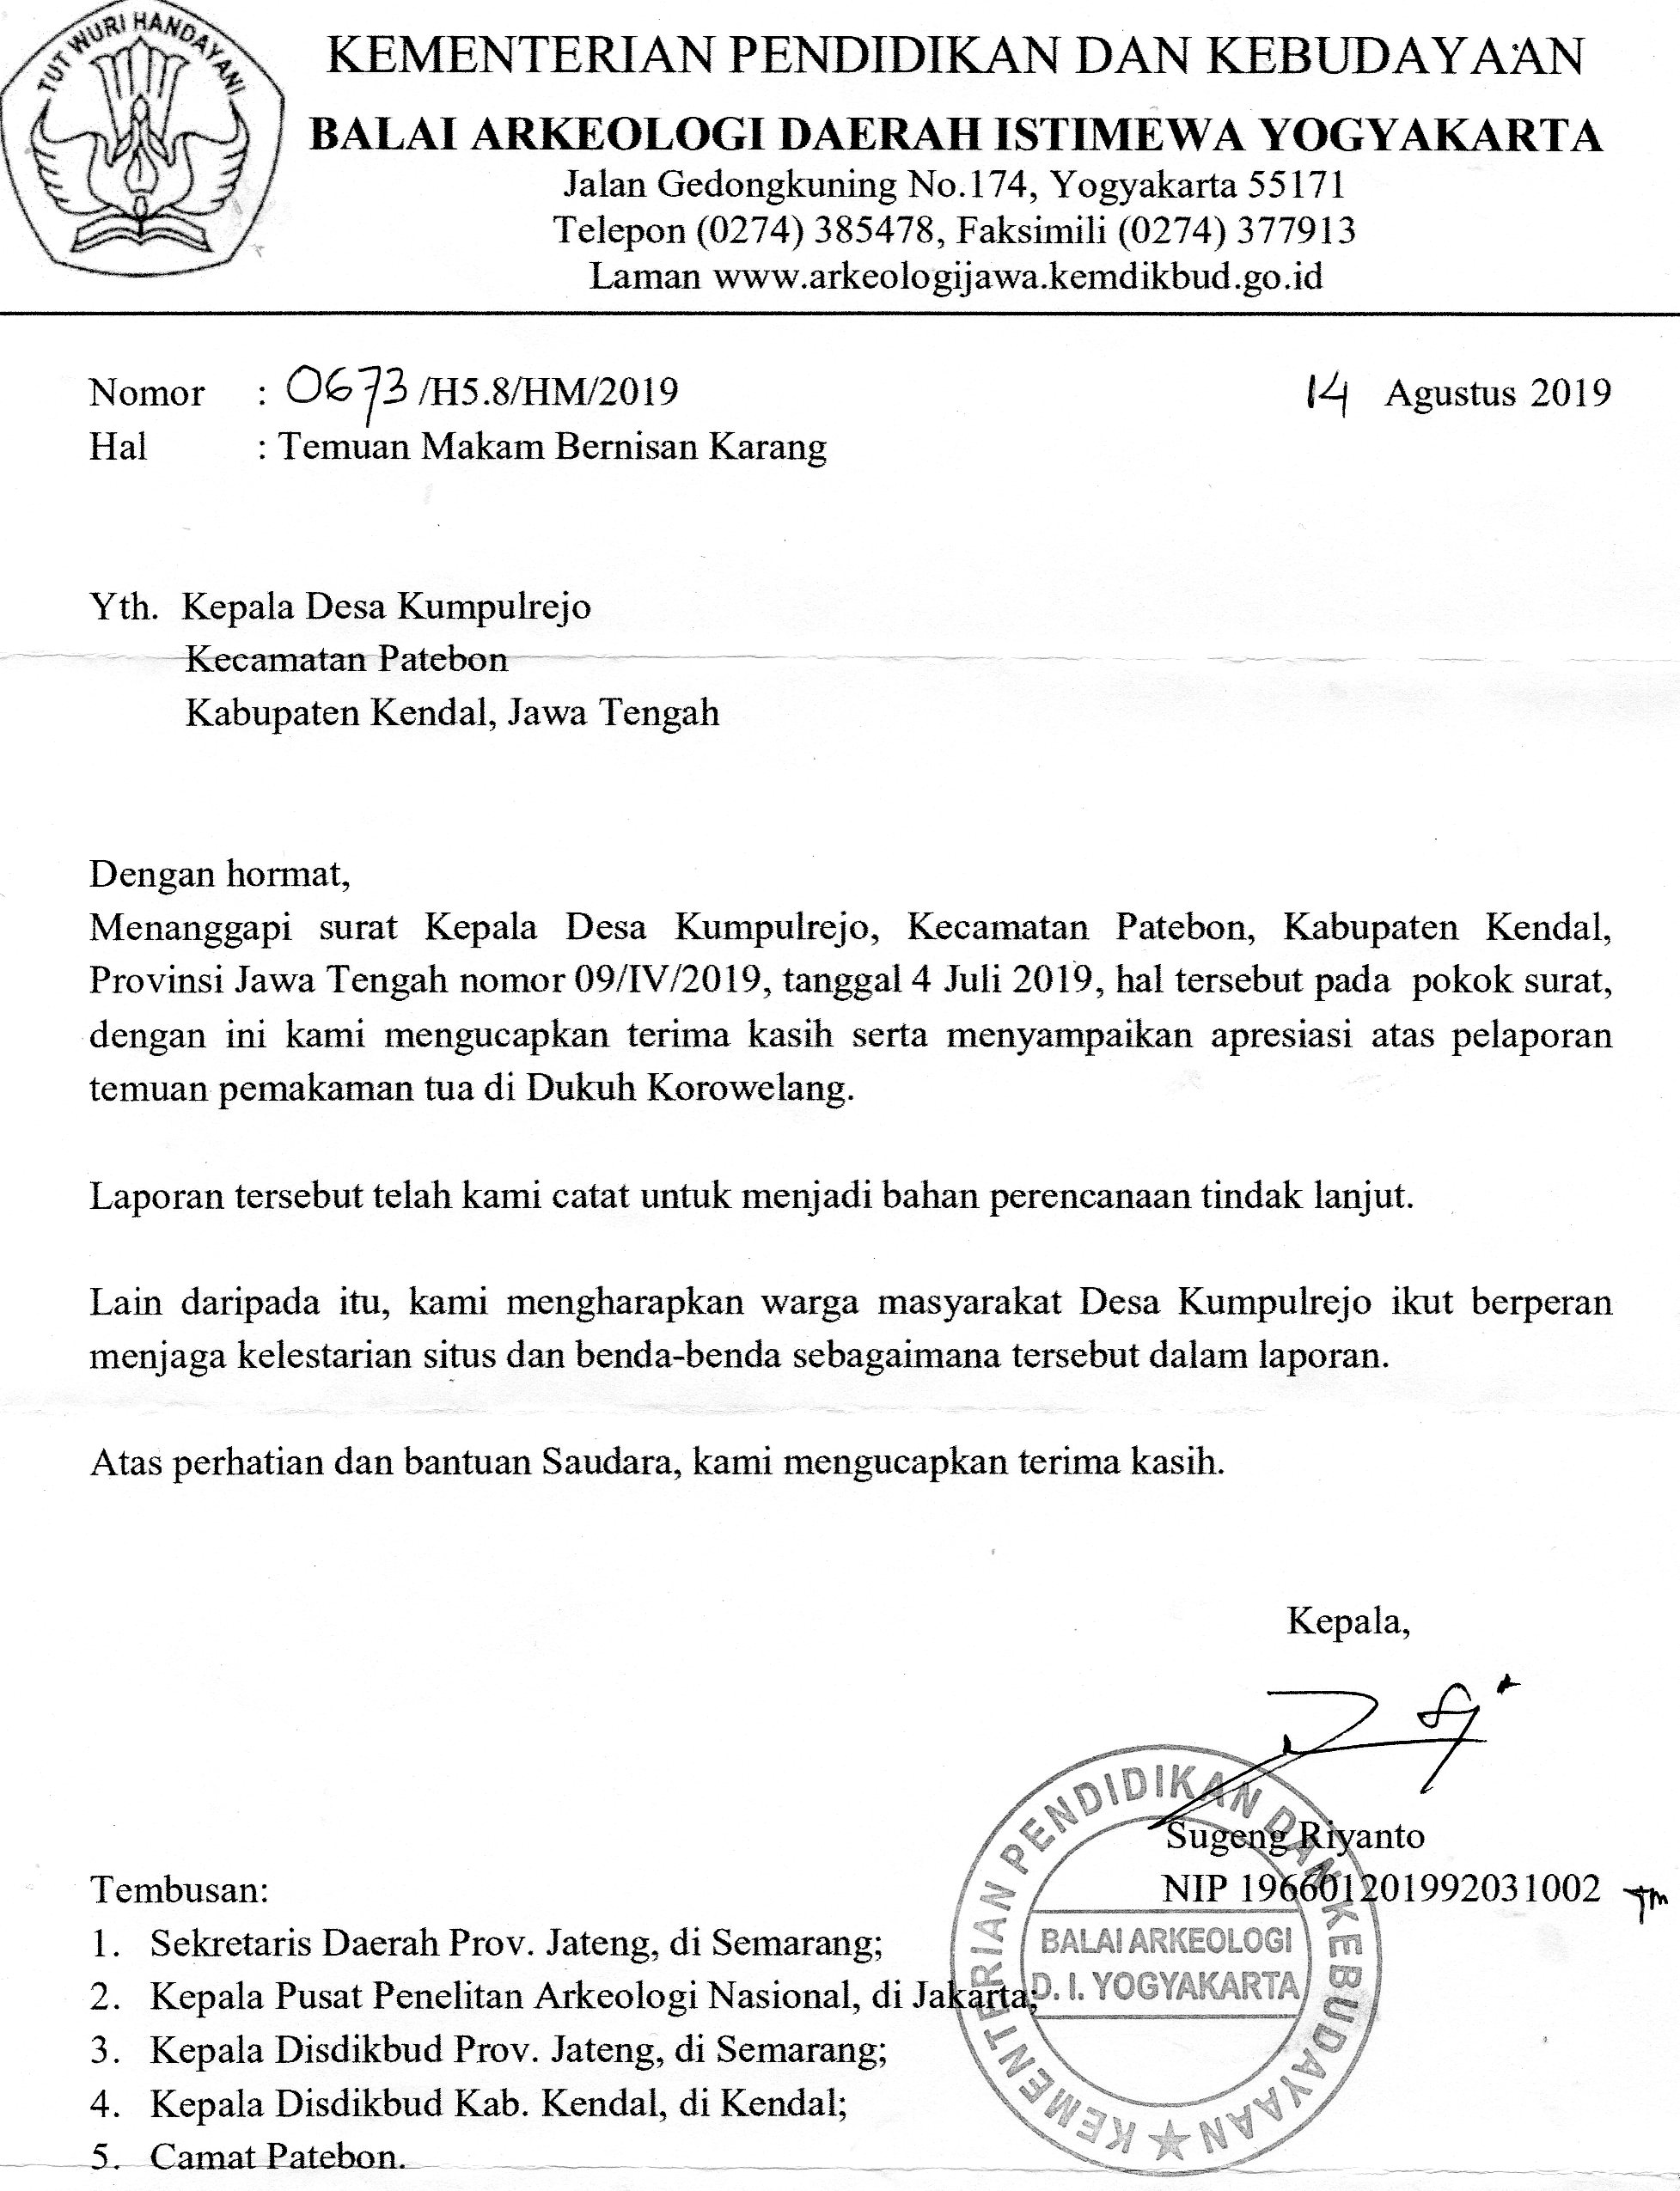 Tanggapan Balai Arkeologi Daerah Istimewa Yogyakarta Jilid II